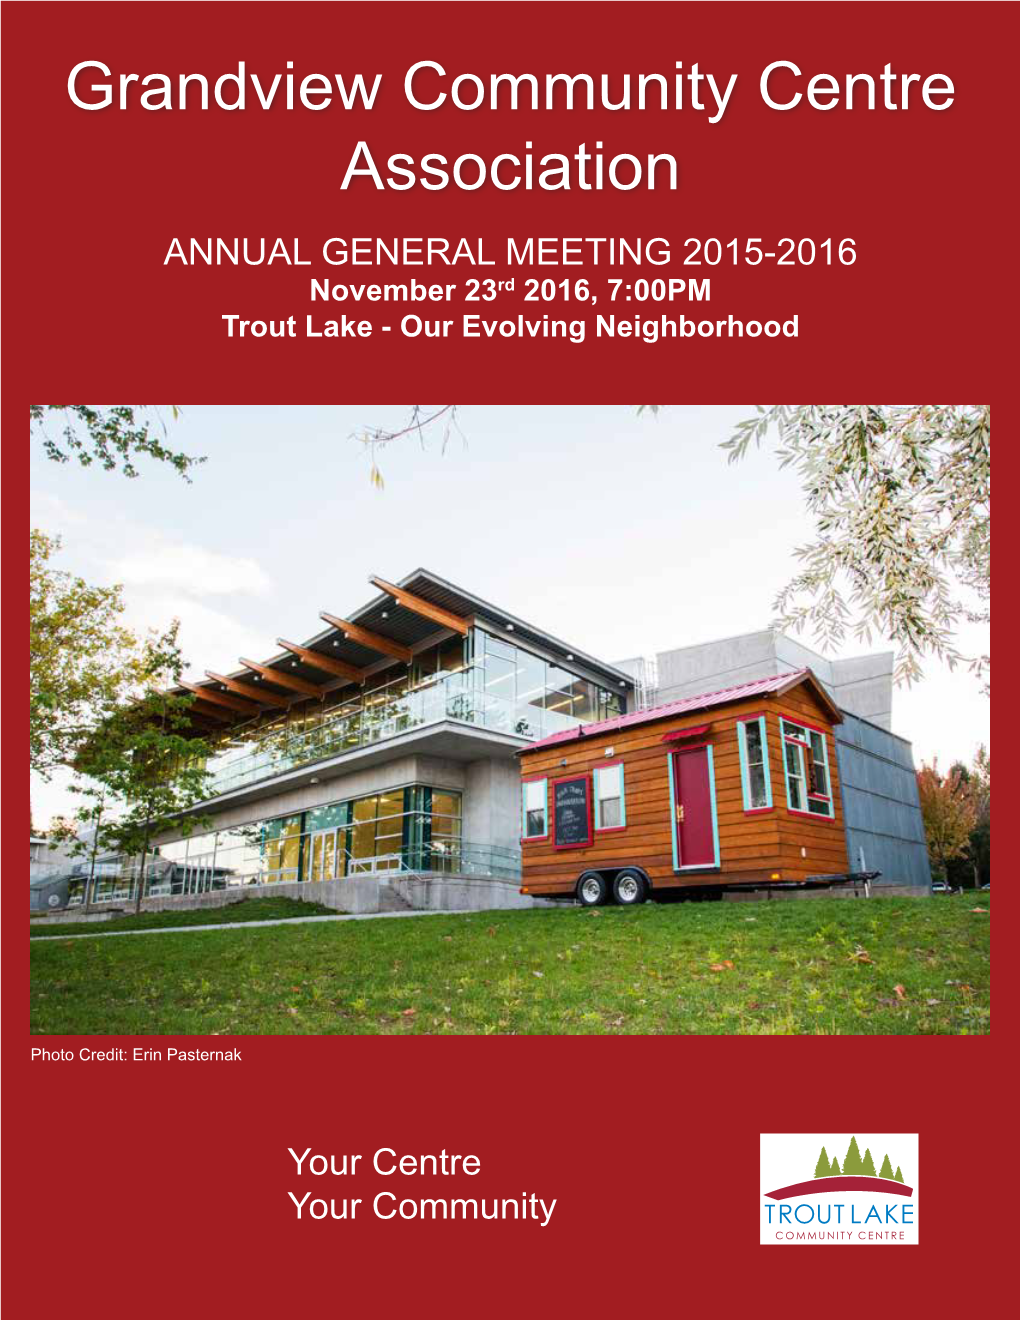 Grandview Community Centre Association 2016 Annual Report